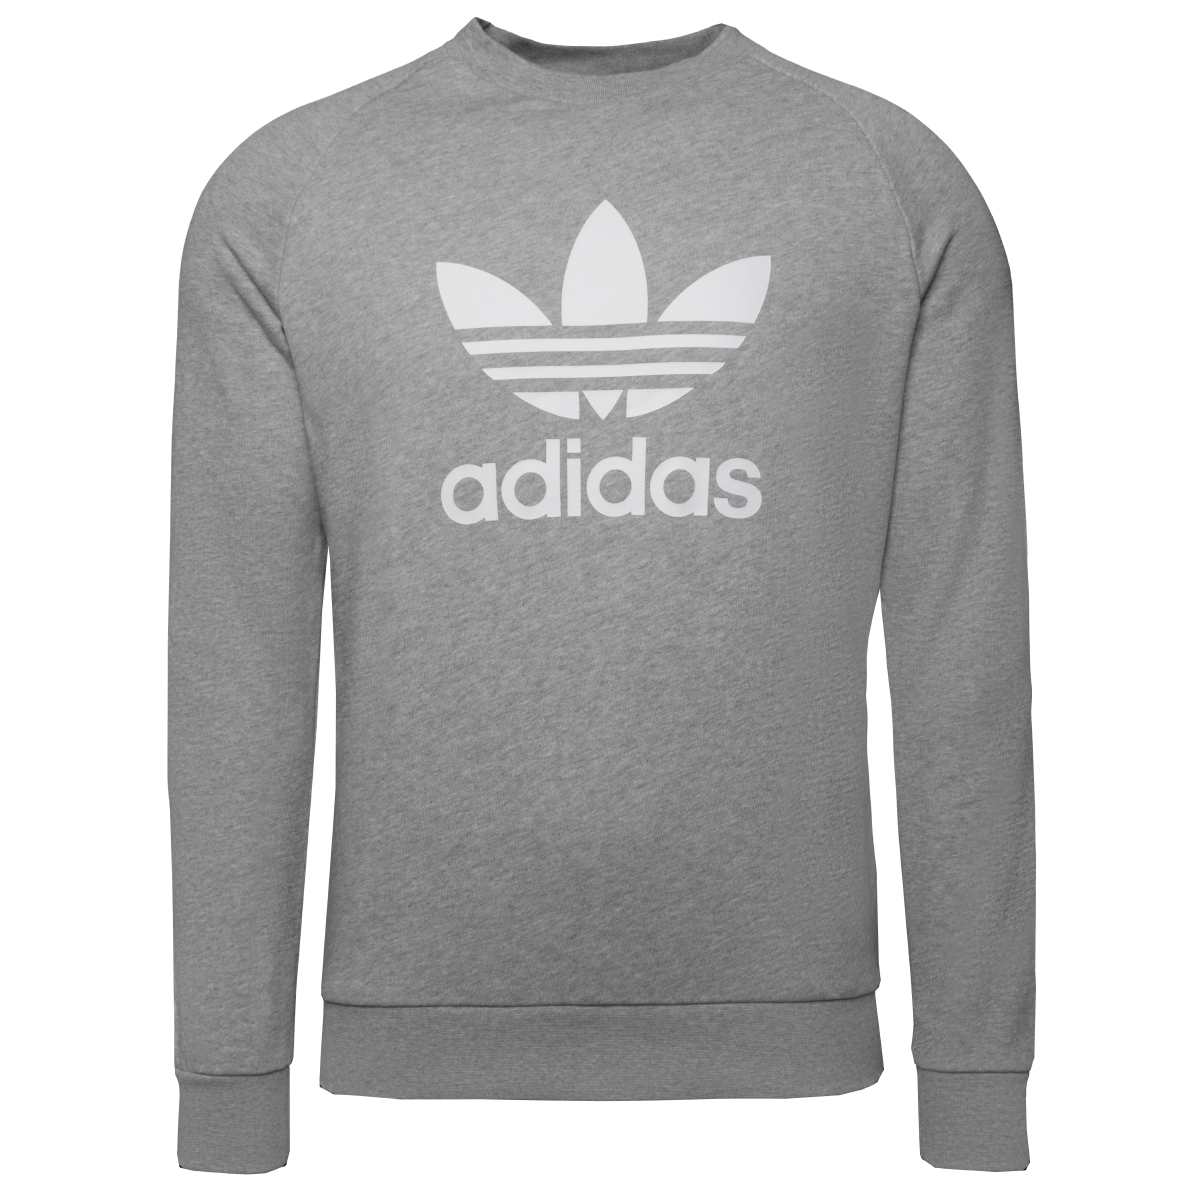 Adidas Adicolor Trefoil Crew Neck Sweatshirt grau